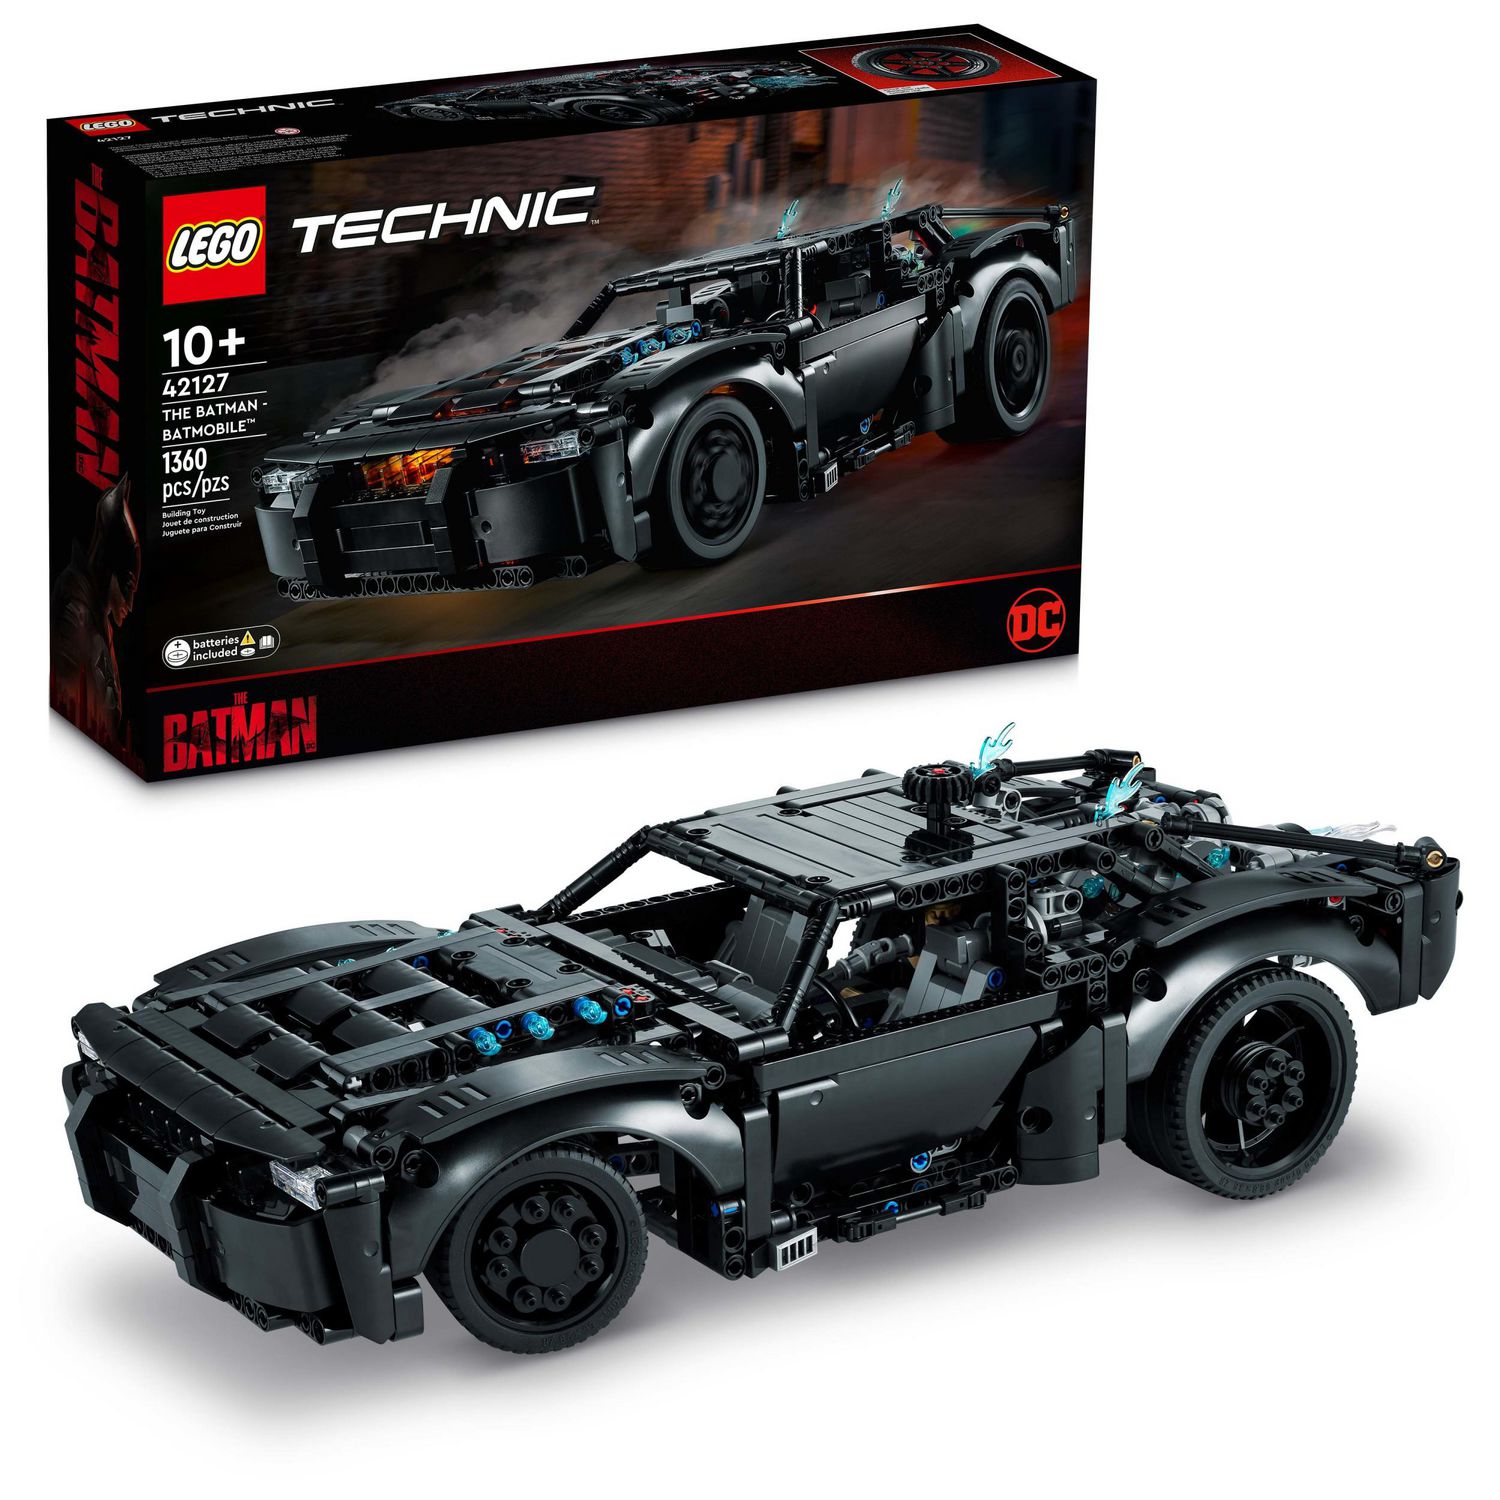 LEGO Technic THE BATMAN – BATMOBILE 42127 Model Building Kit